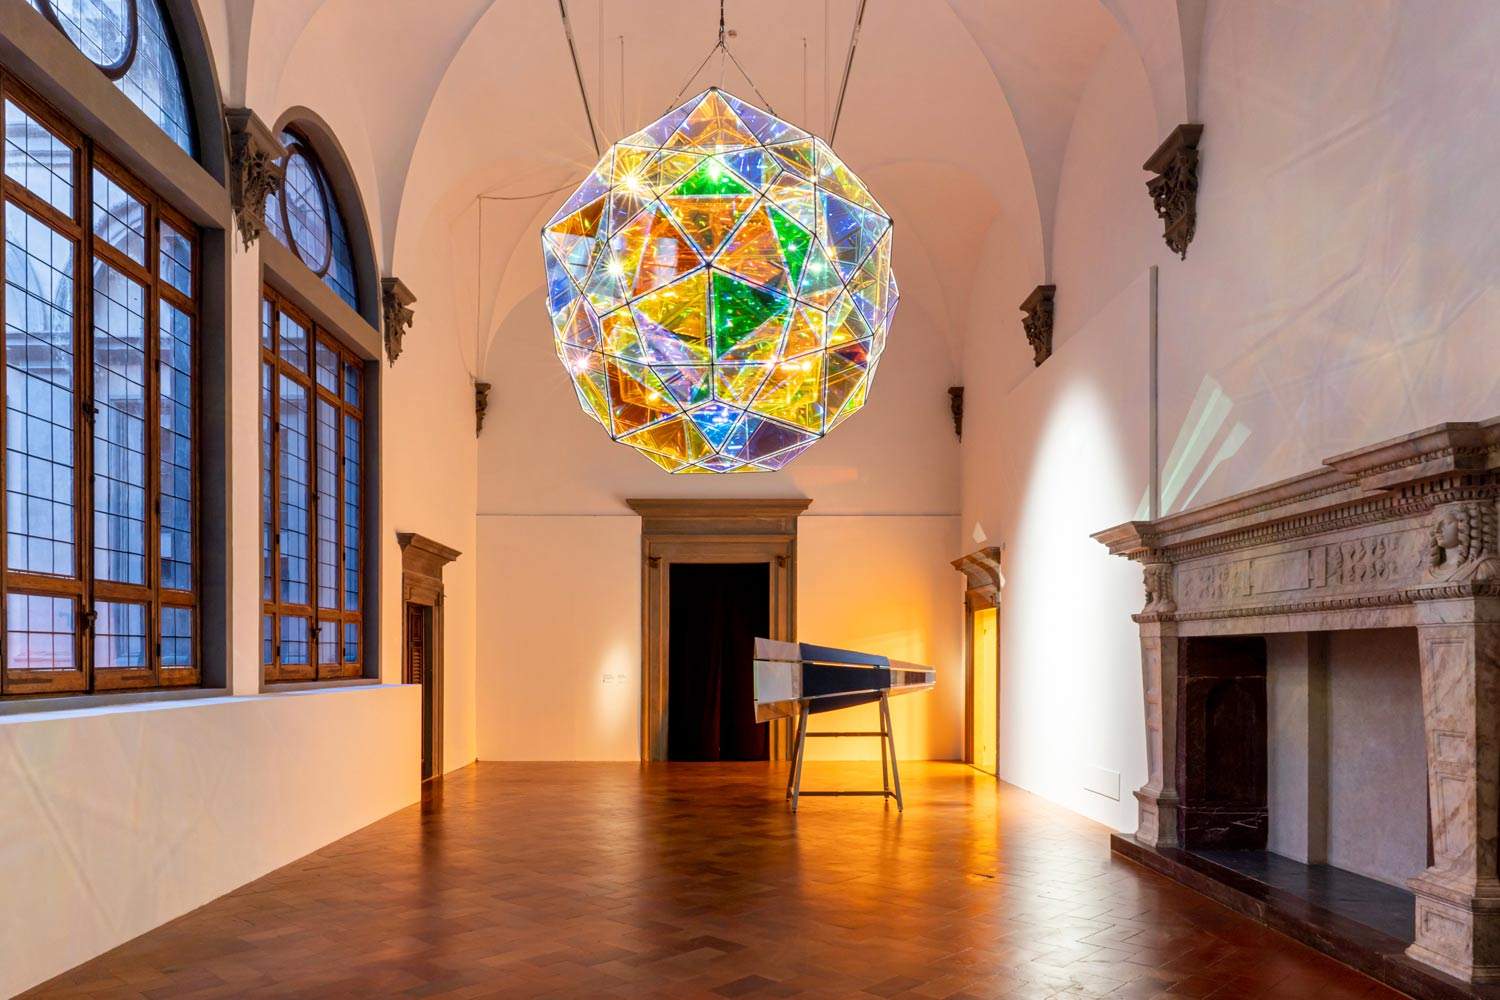 Florence, kicks off Olafur Eliasson's major exhibition at Palazzo Strozzi. Images